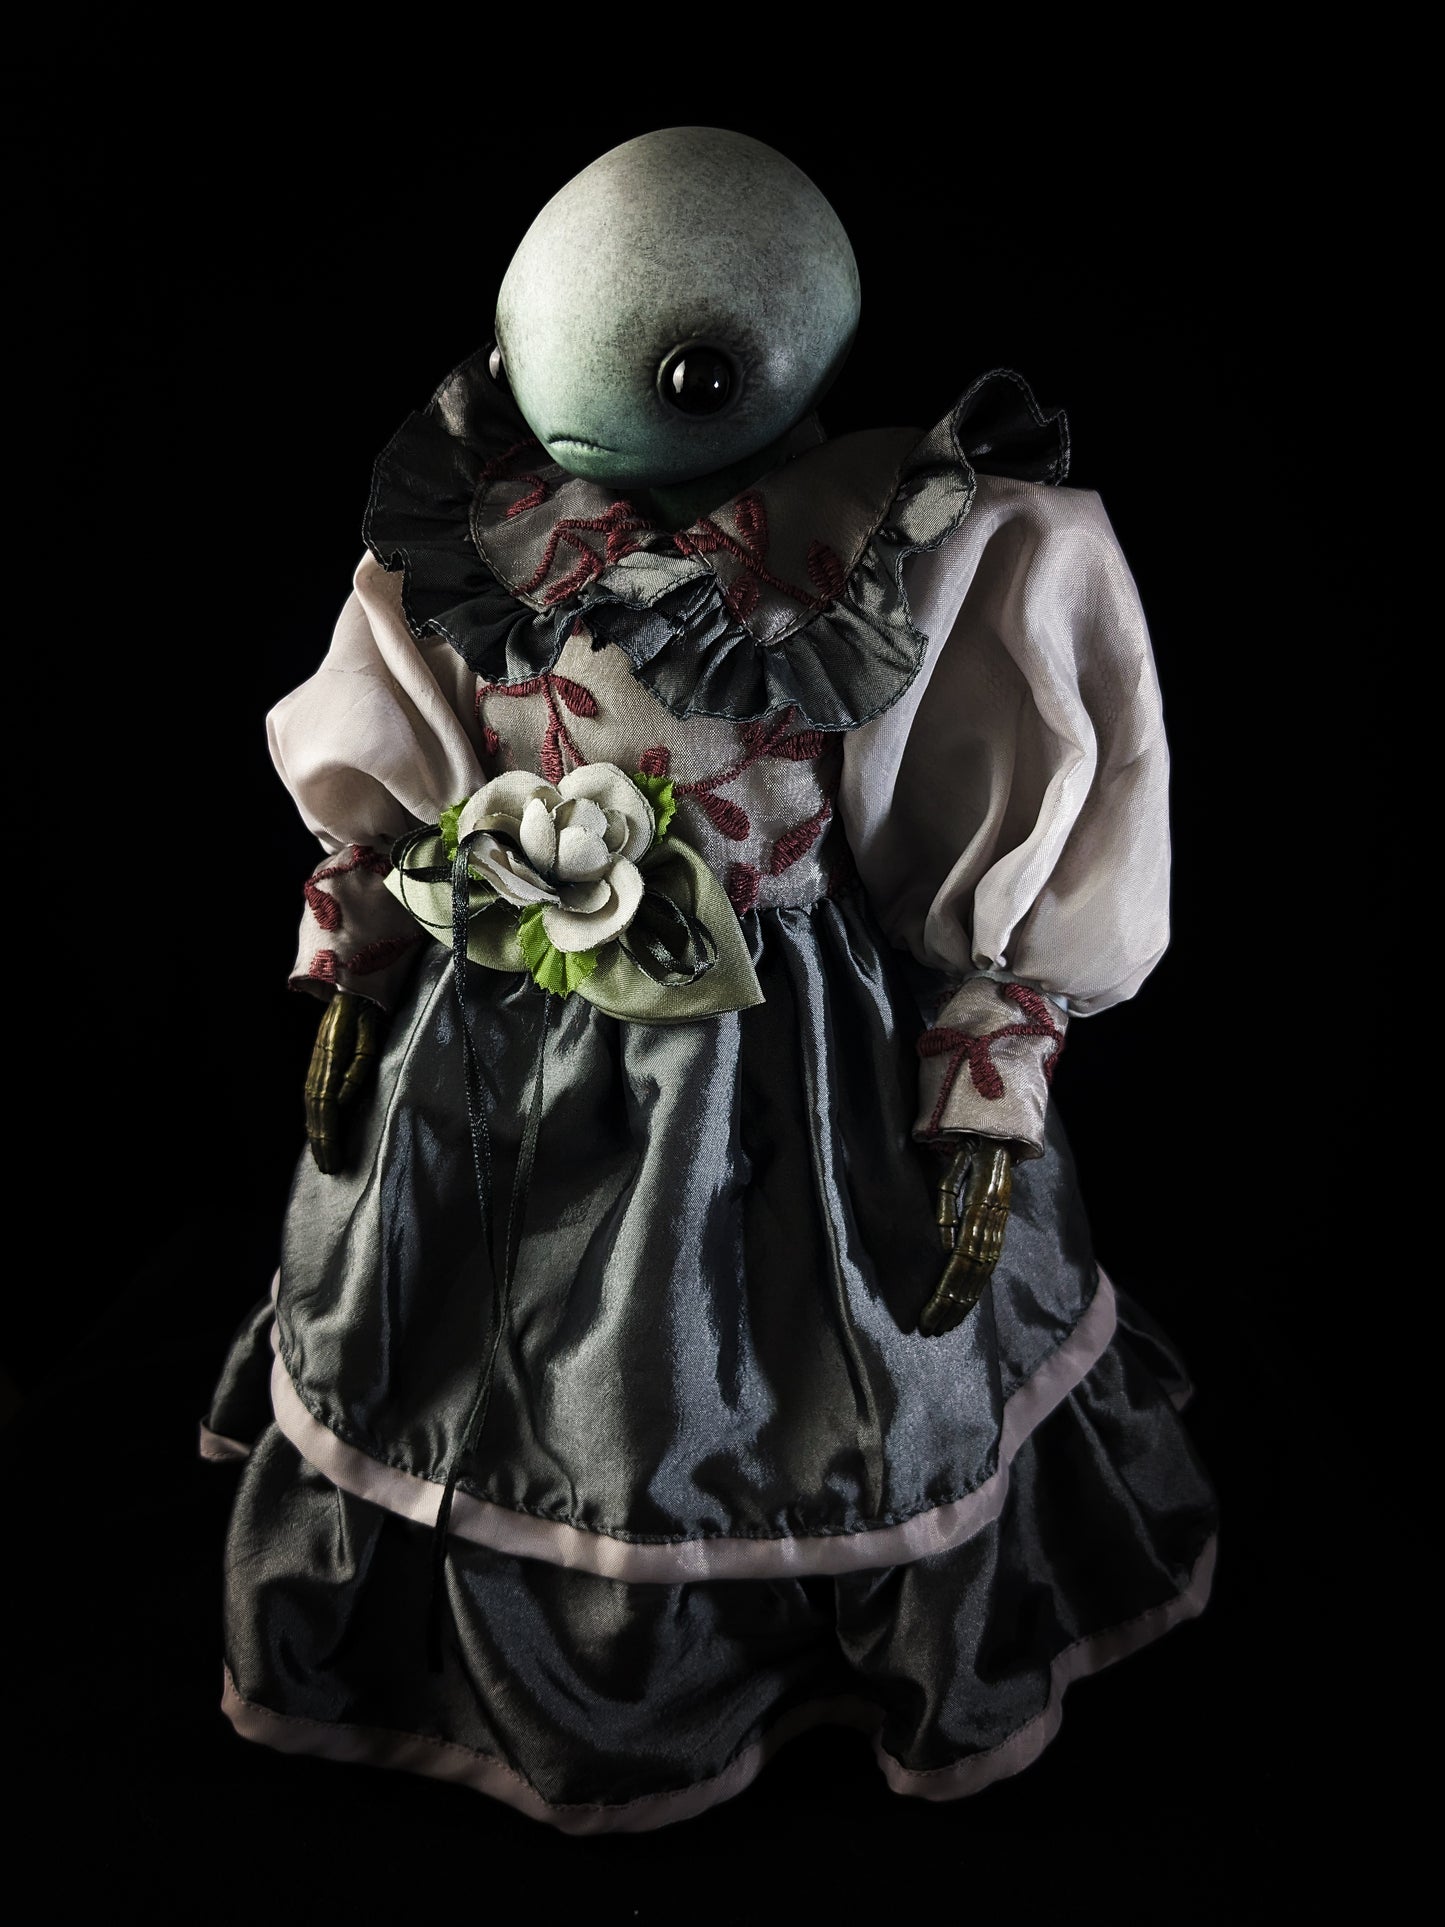 Depression Dolls: TOLKASULK - Handmade Posable Gothic Art Doll for Enigmatic Souls